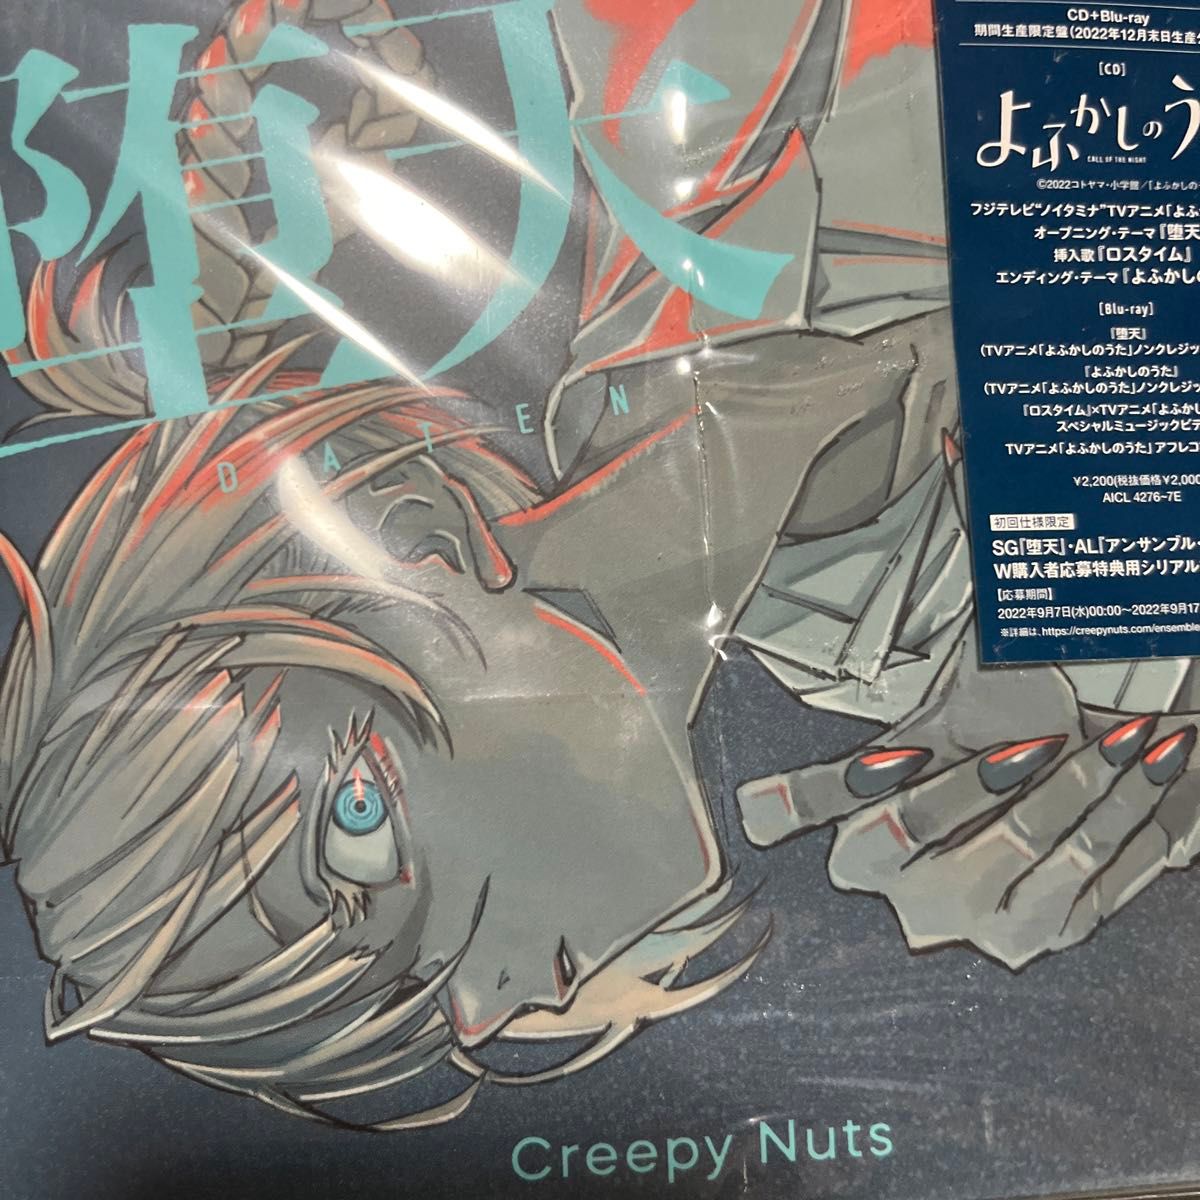 Creepy Nuts よふかしのうた 【期間生産限定盤】Amazon限定 メガジャケット付属 CD+Blu-ray